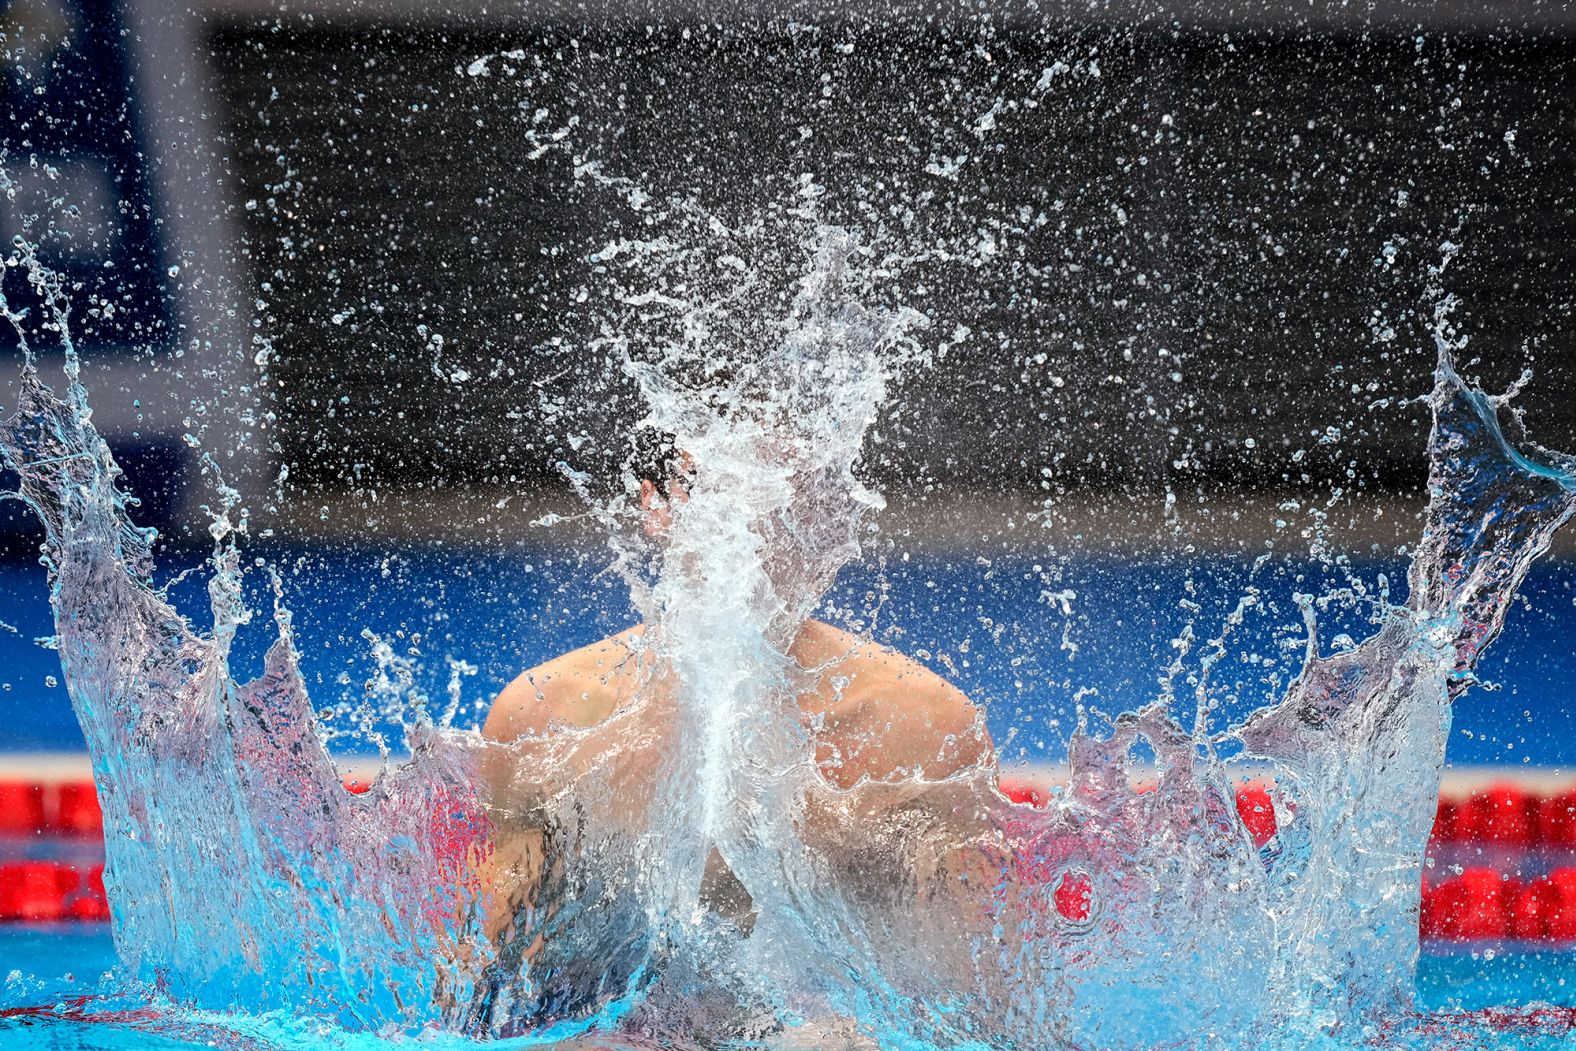 Russian swimmer Evgeny Rylov celebrates after <a href="index.php?page=&url=https%3A%2F%2Fwww.cnn.com%2Fworld%2Flive-news%2Ftokyo-2020-olympics-07-26-21-spt%2Fh_ca80c586169141bbb5c36a560e96b1cf" target="_blank">winning the 100-meter backstroke</a> on July 27. His countryman Kliment Kolesnikov won the silver.